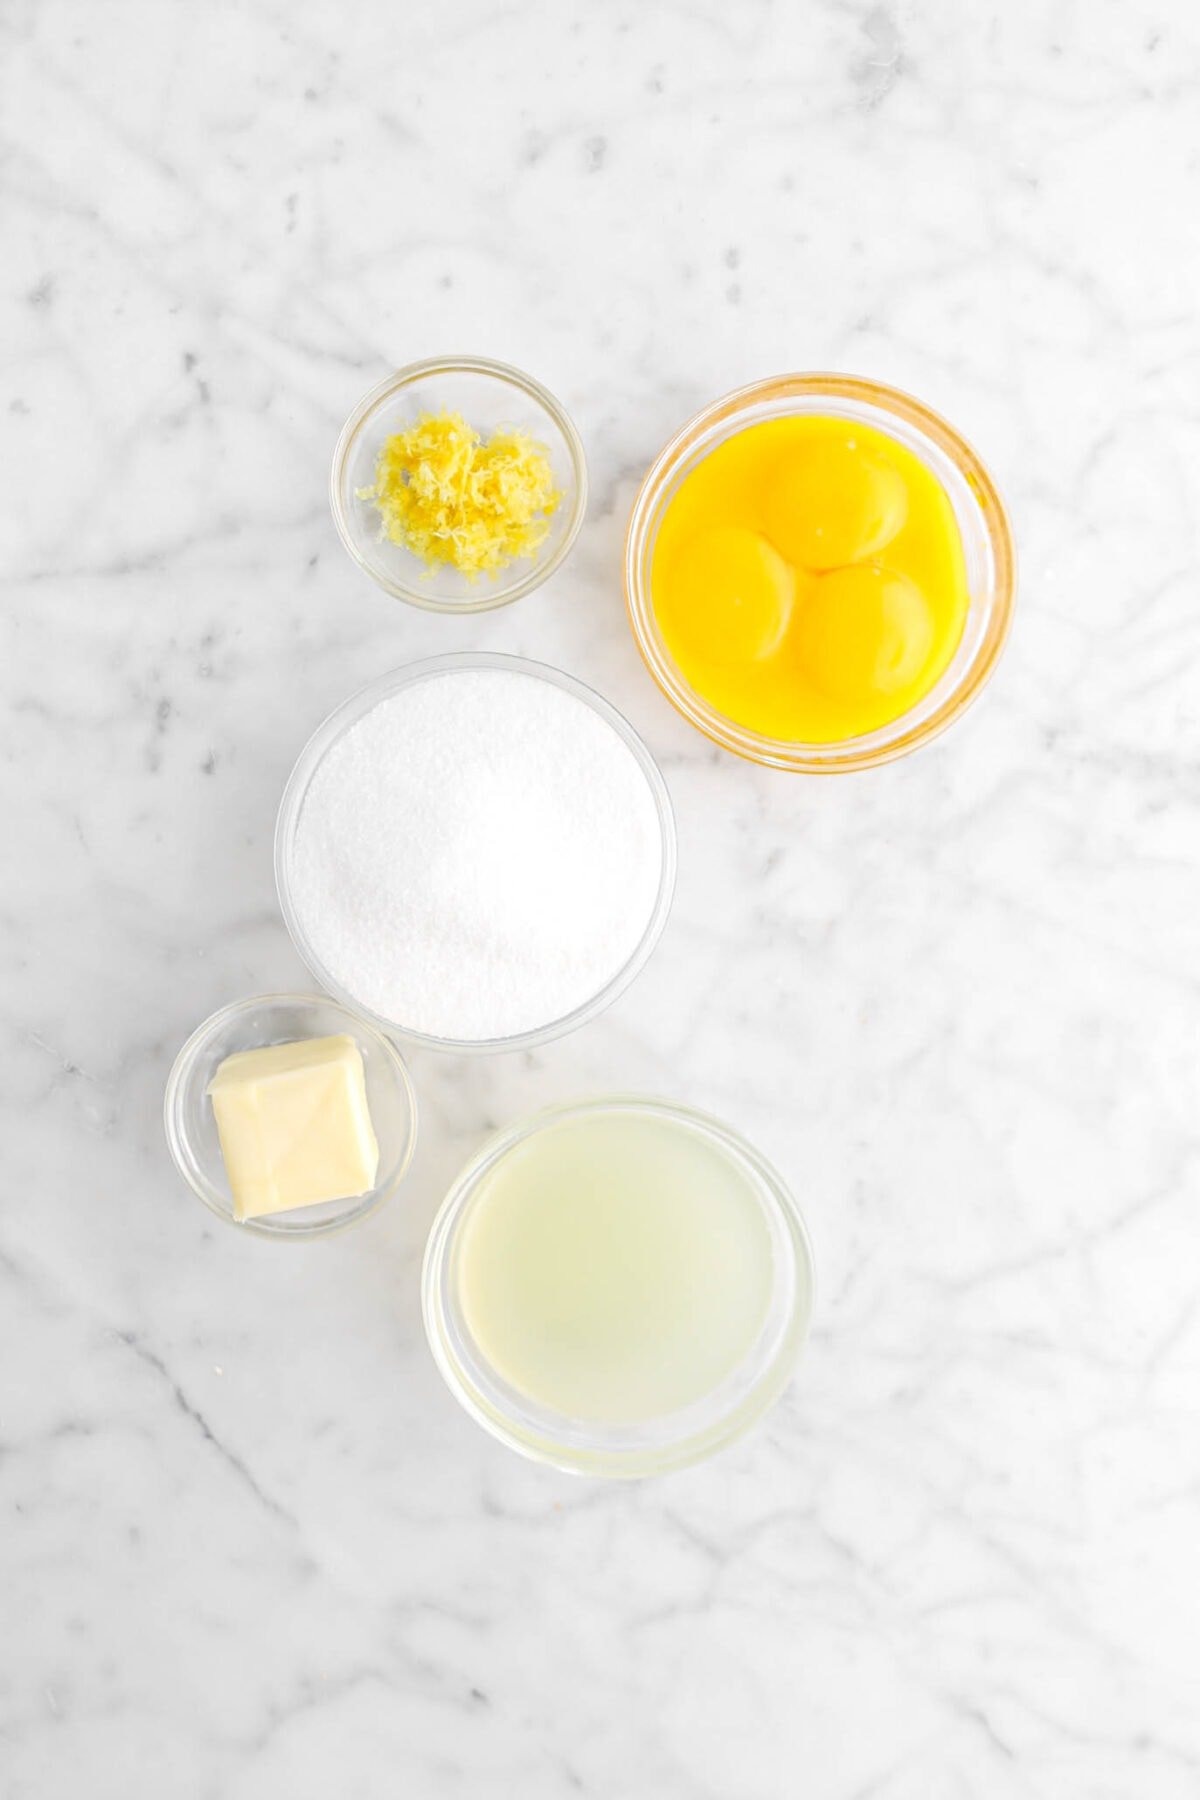 lemon zest, egg yolks, sugar, butter, and lemon juice on marble surface.